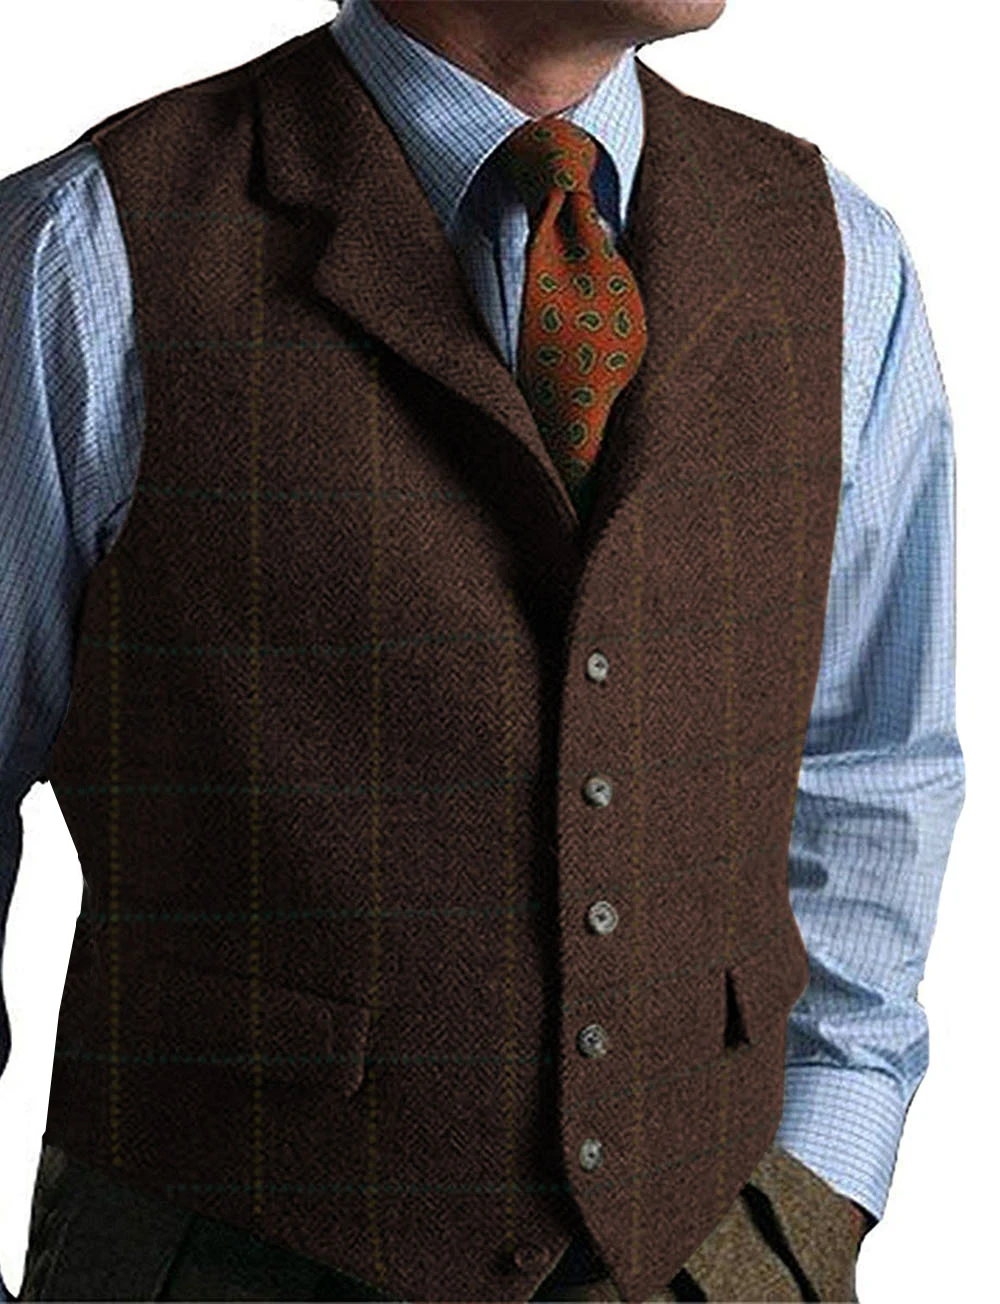 Mens Wool Tweed Waistcoat Casual Wool Herringbone/Tweed Tailored Collar Suit Waistcoat Autumn Winter Formal Business Tuxedo Suit Waistcoat Vest Jacket Top Coat